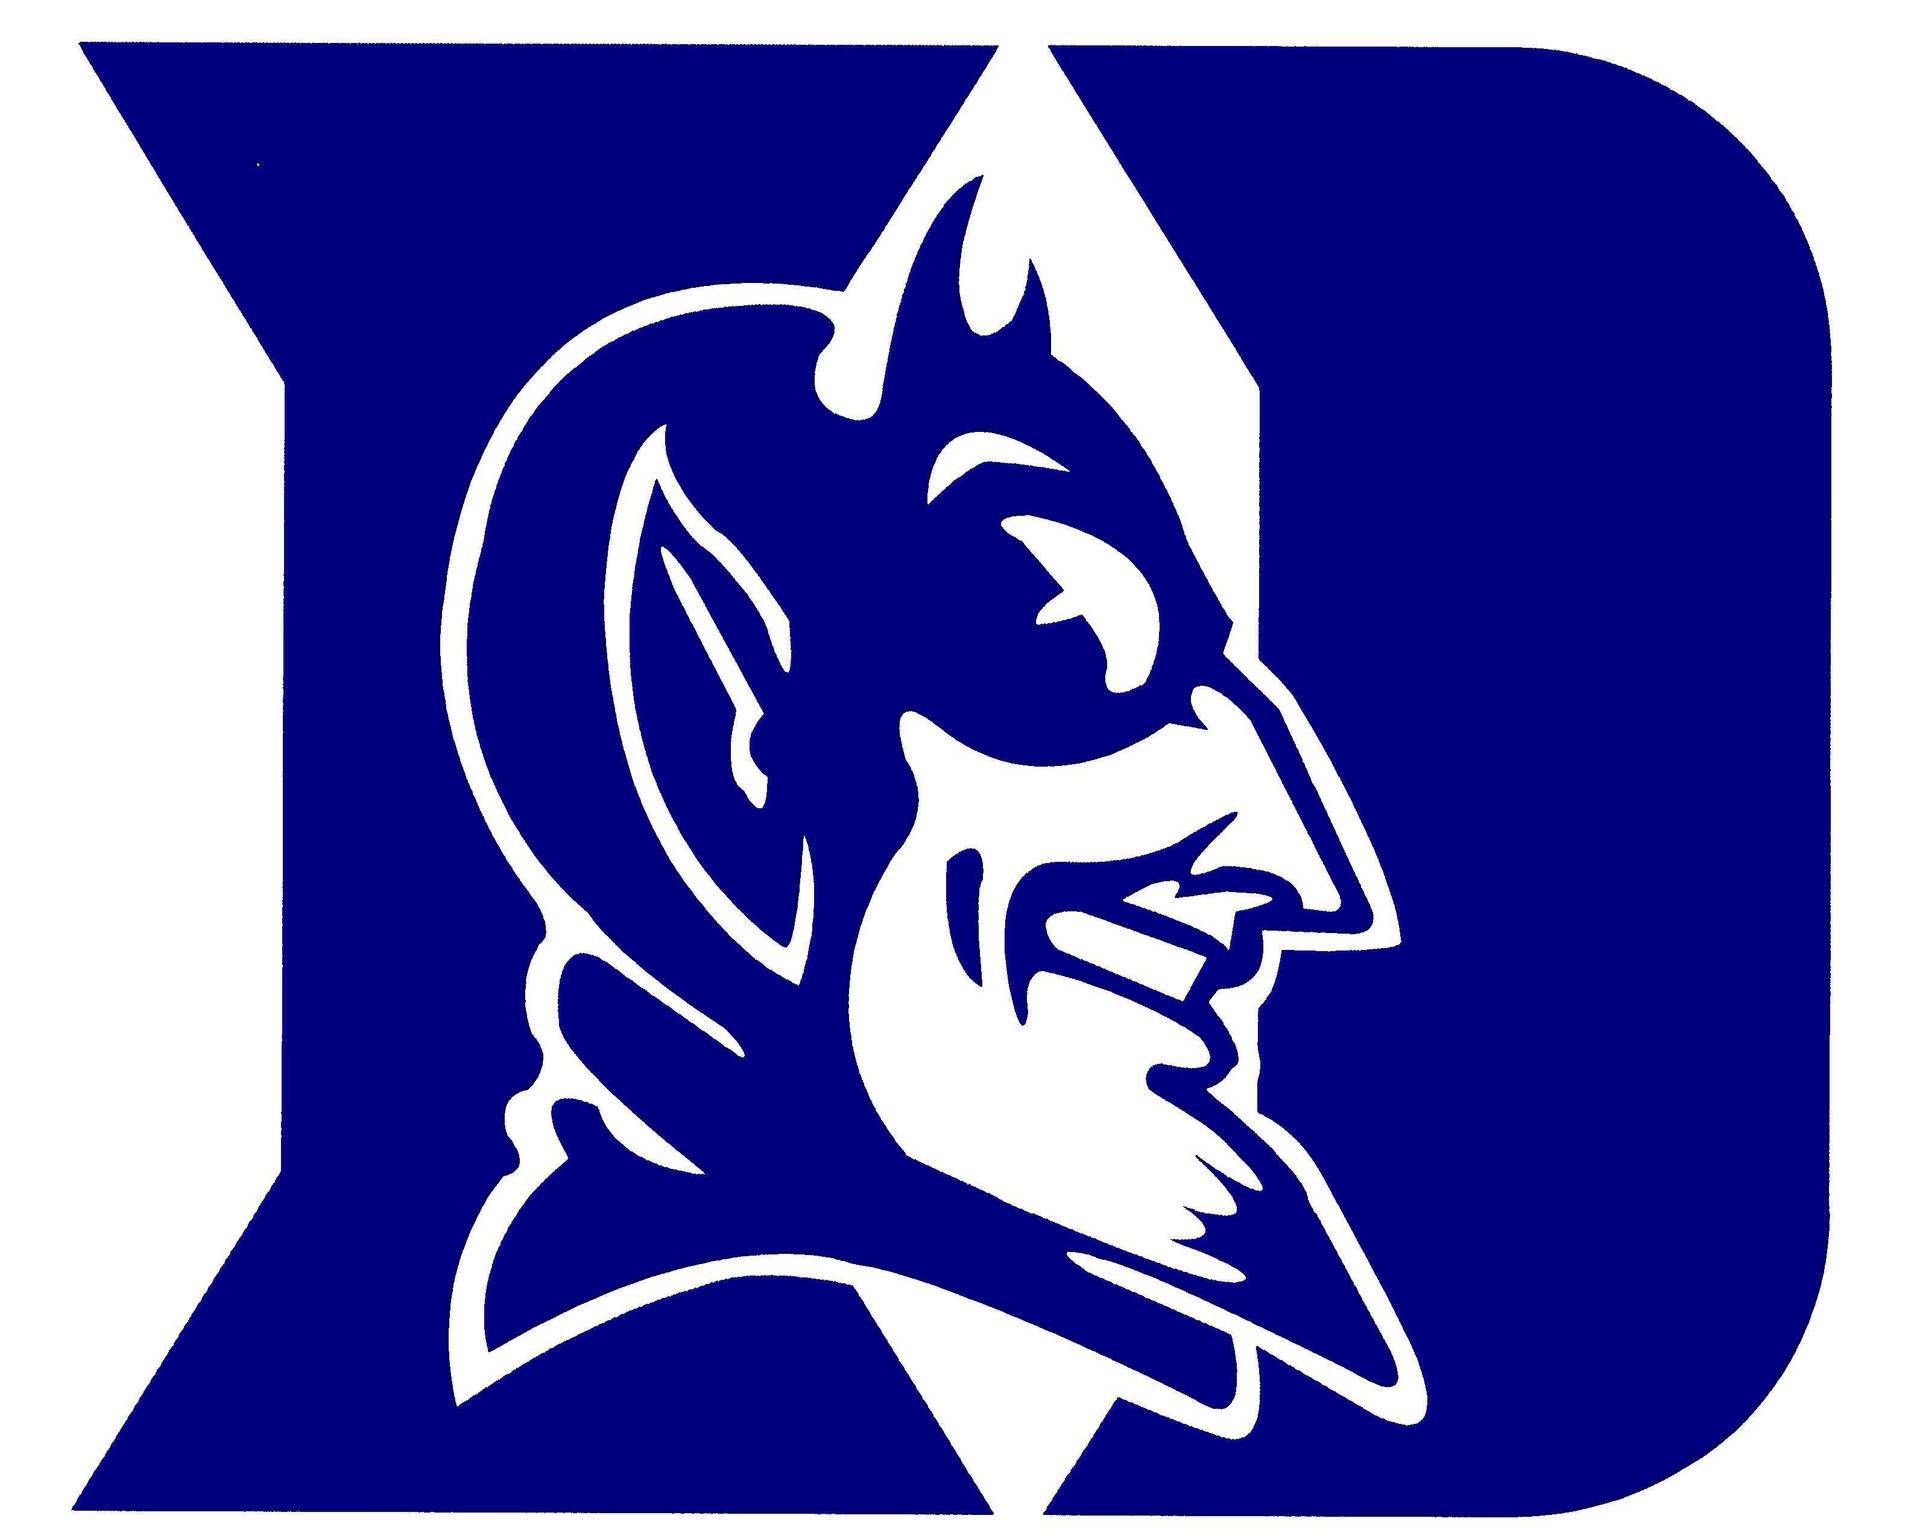 Logotipodel Equipo De Baloncesto De La Universidad De Duke. Fondo de pantalla